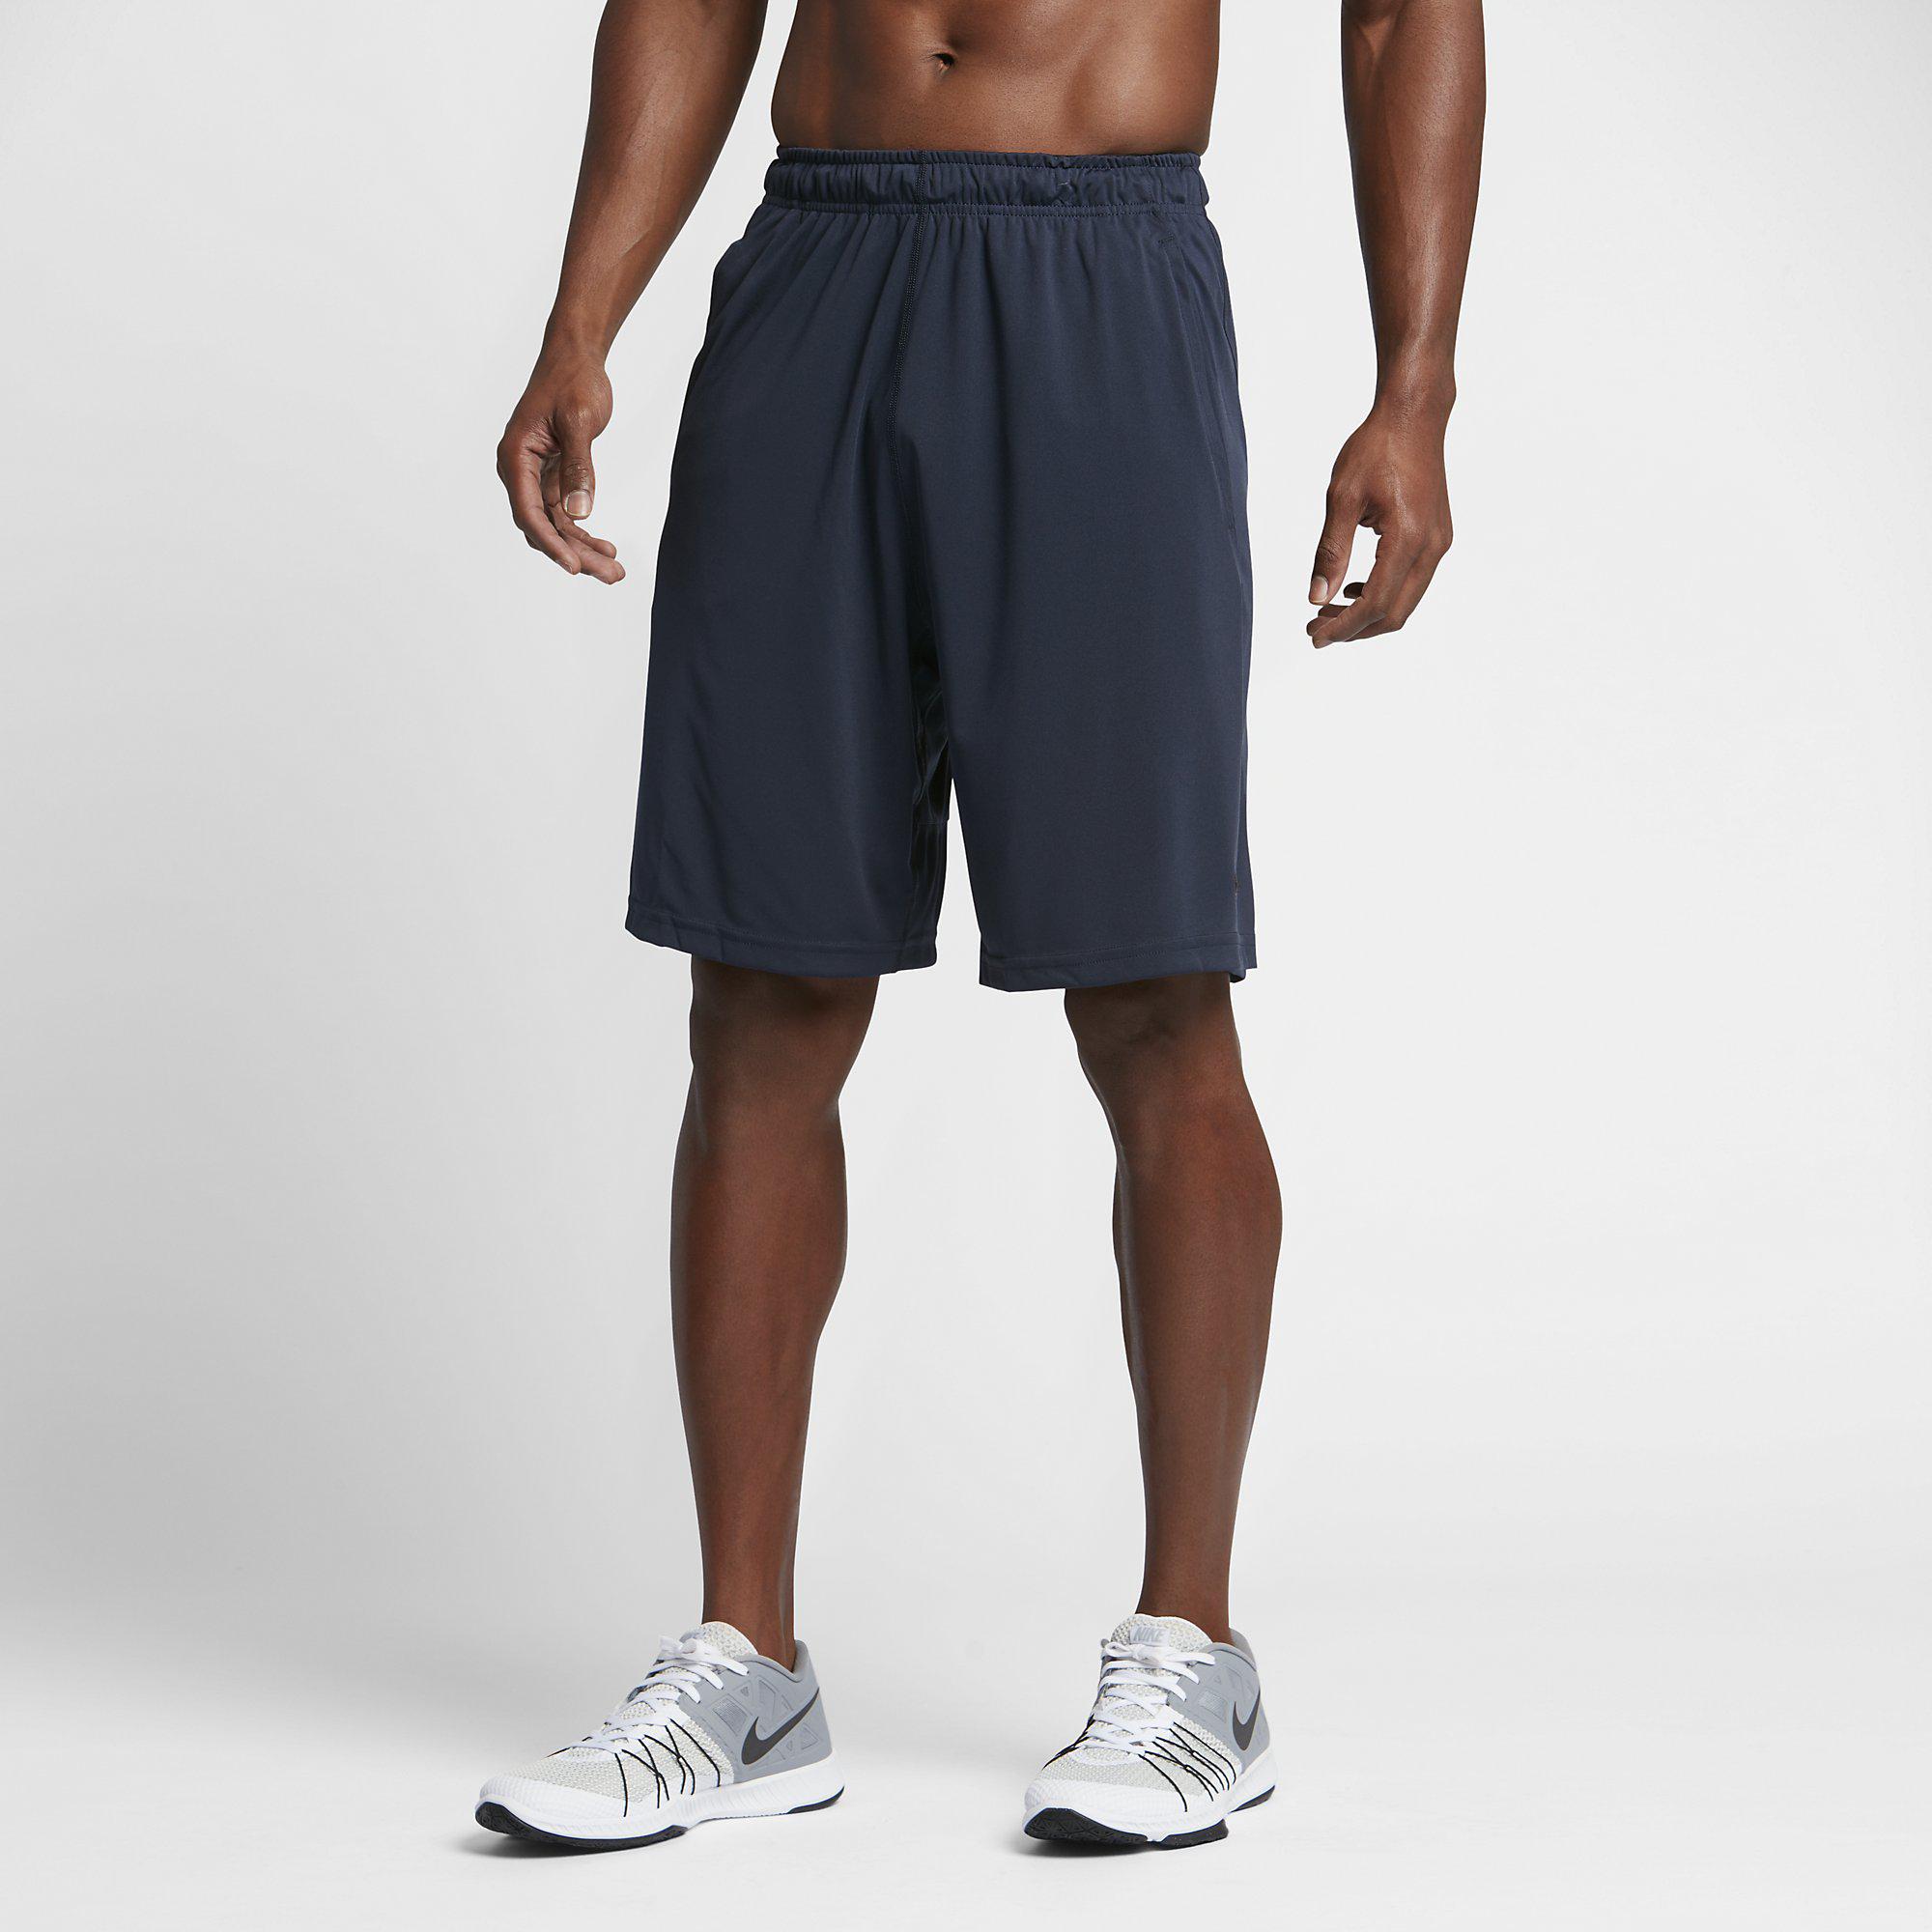 Nike Mens Dry Training Shorts - Obsidian/Black - Tennisnuts.com